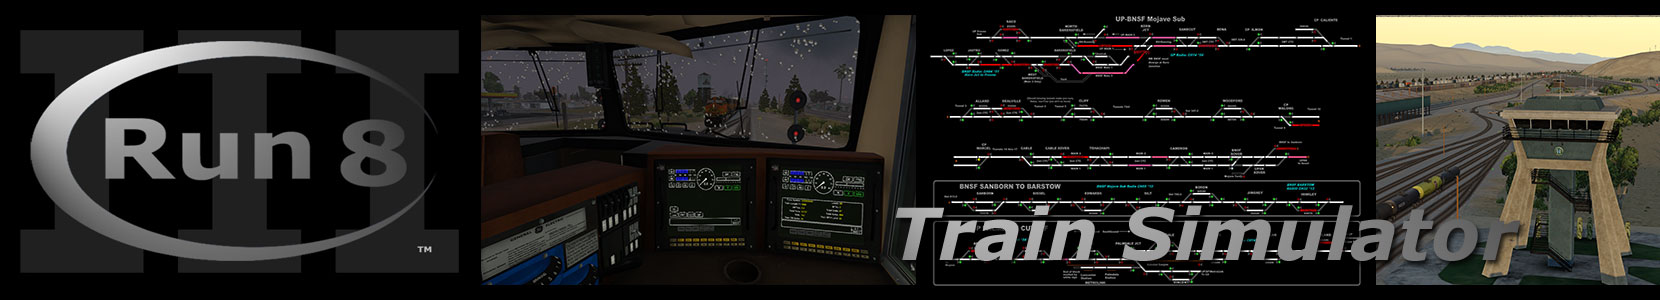 Run 8 Train Simulator v3